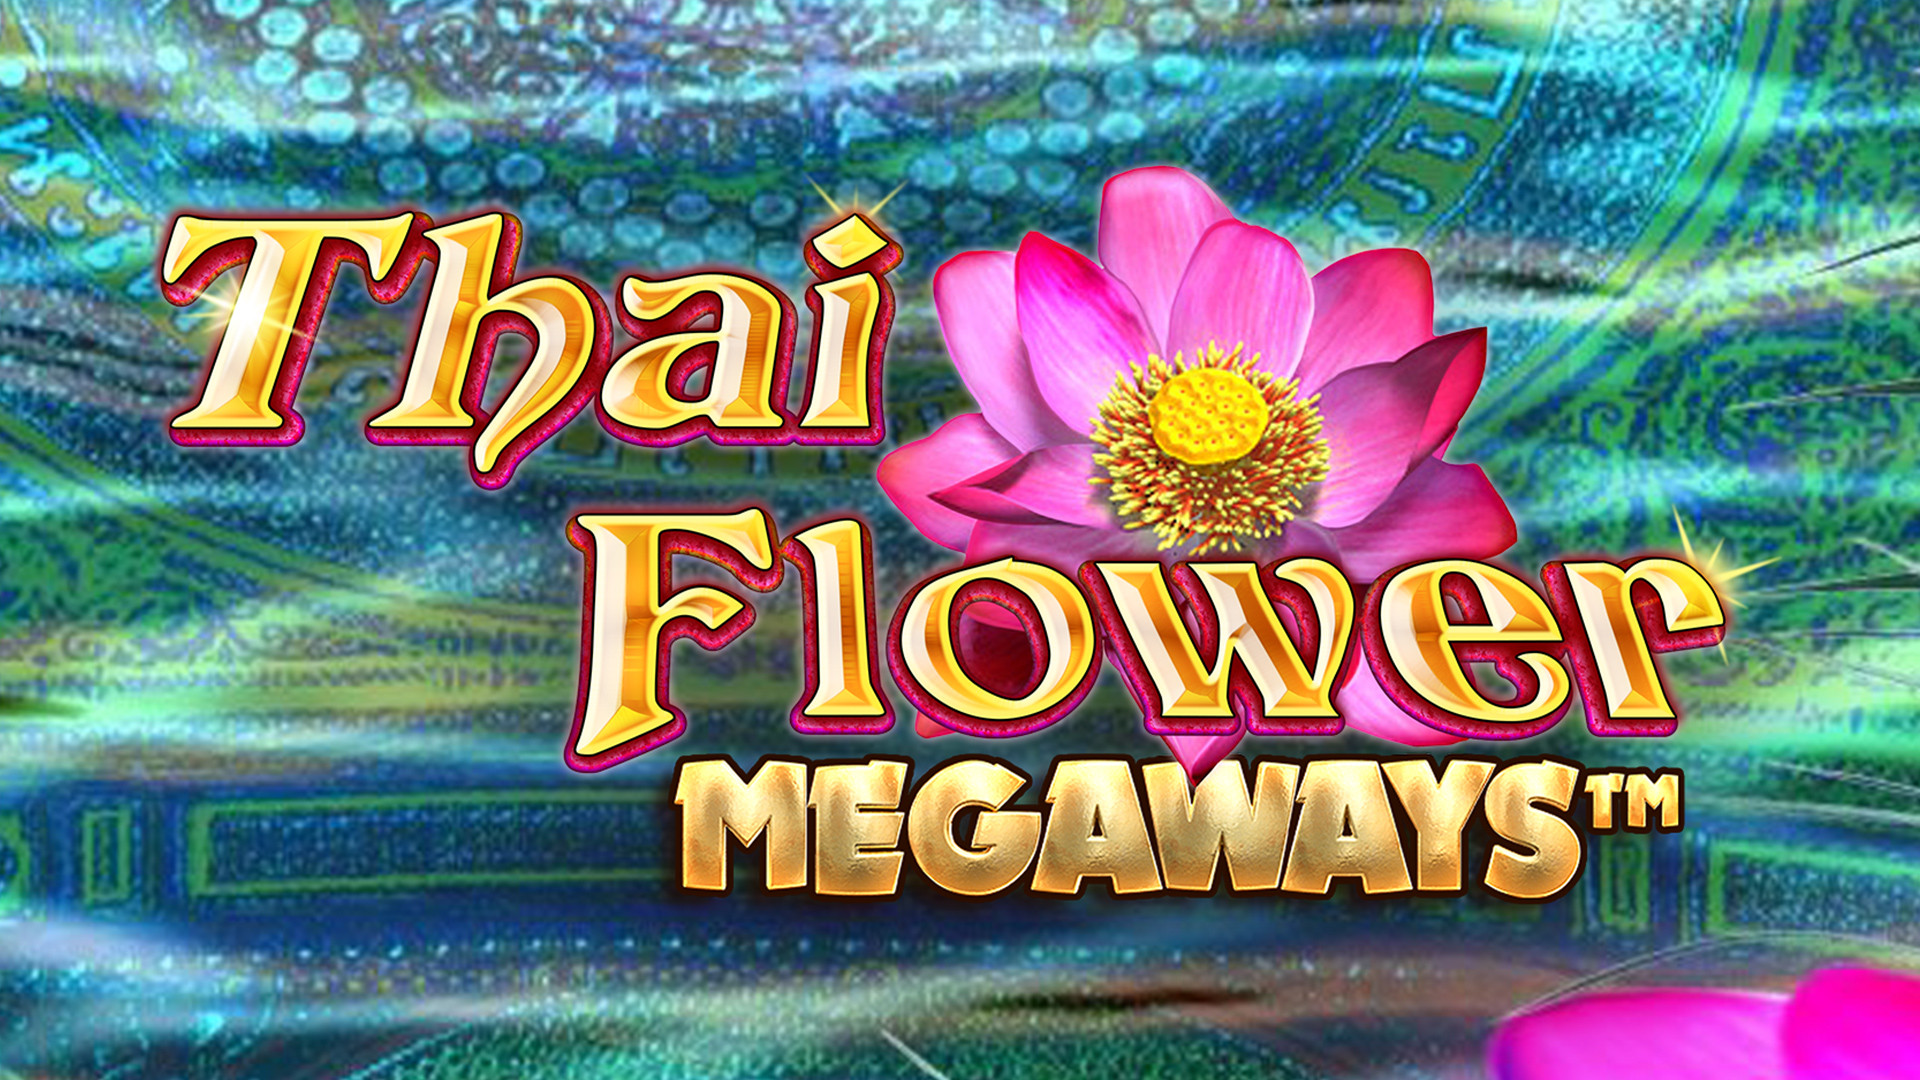 Thai Flower MEGAWAYS